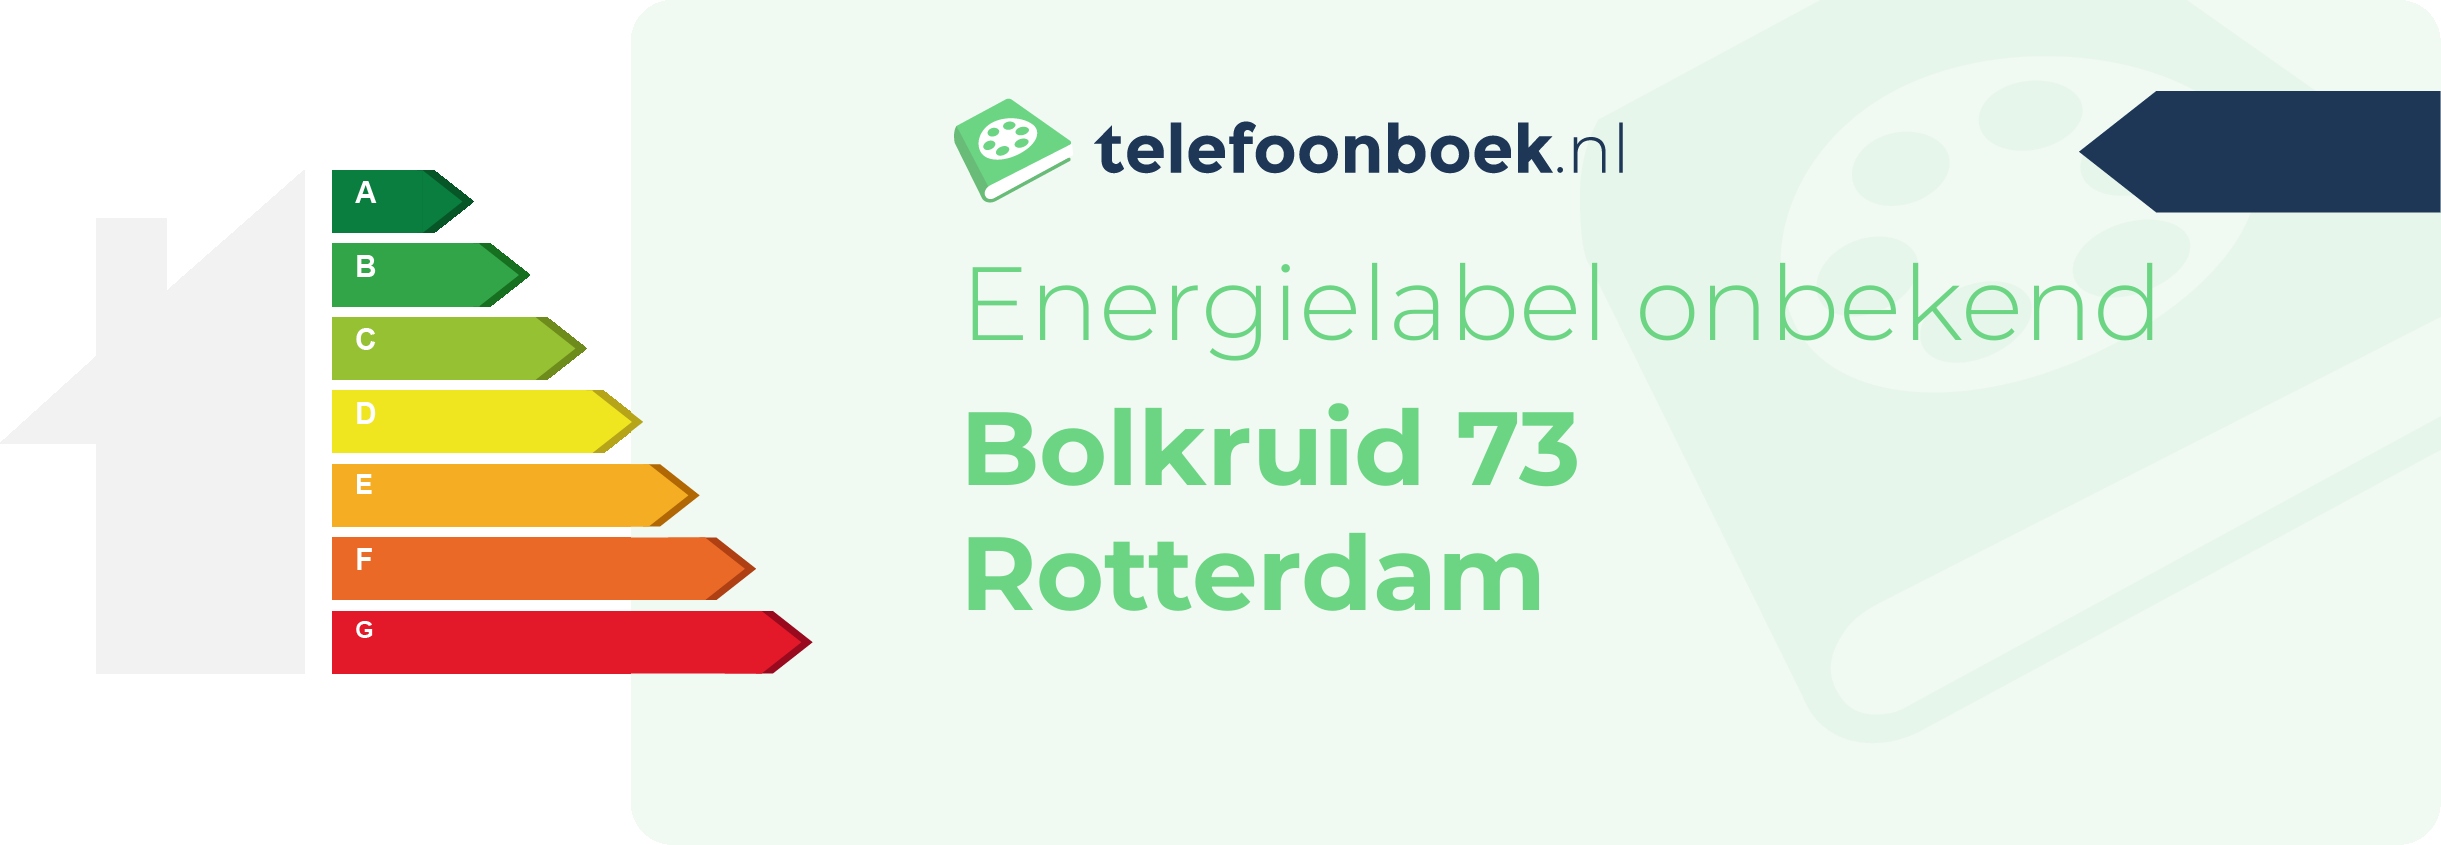 Energielabel Bolkruid 73 Rotterdam